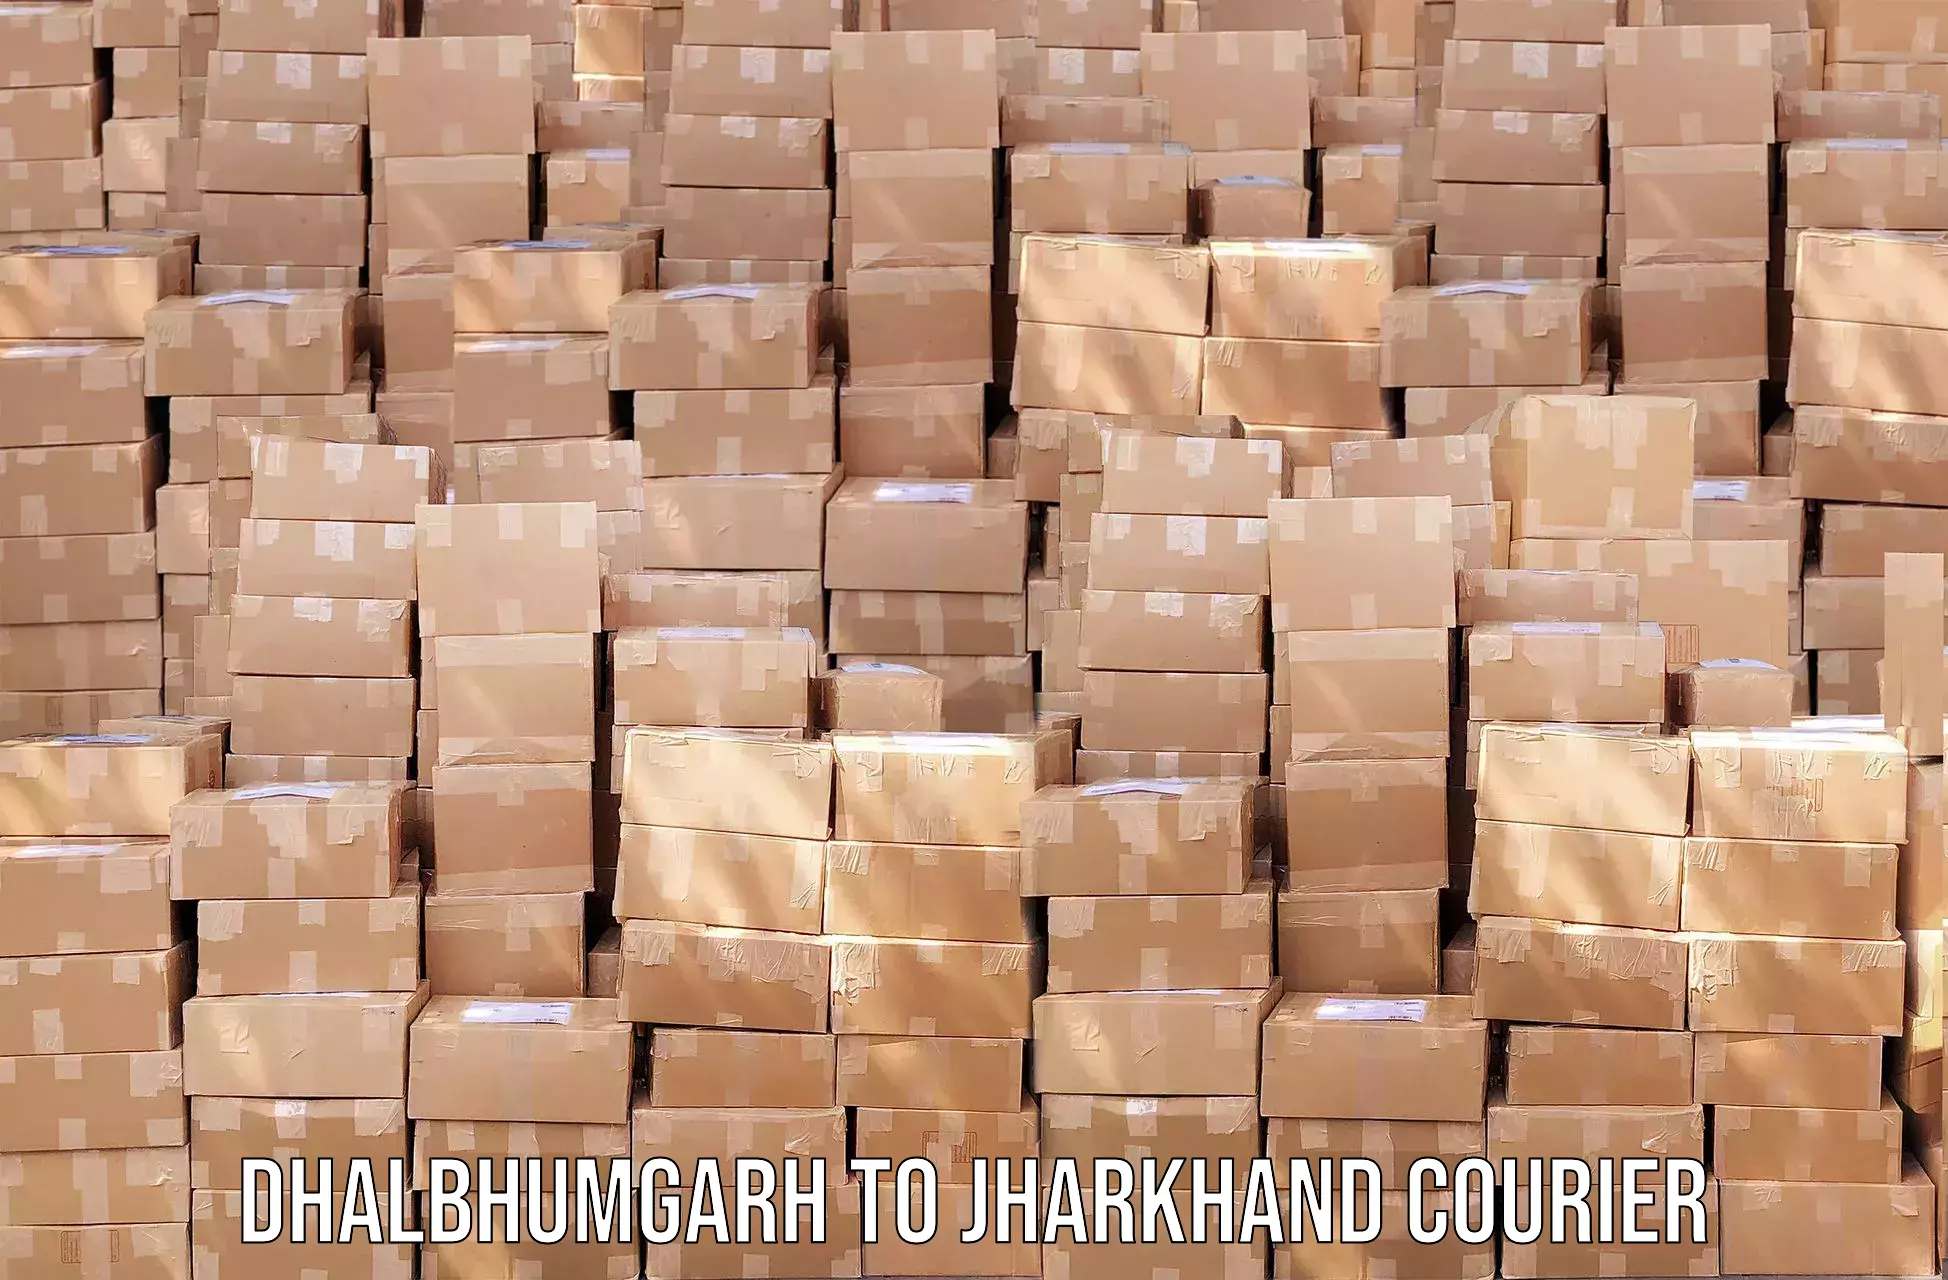 Advanced shipping network Dhalbhumgarh to Bokaro